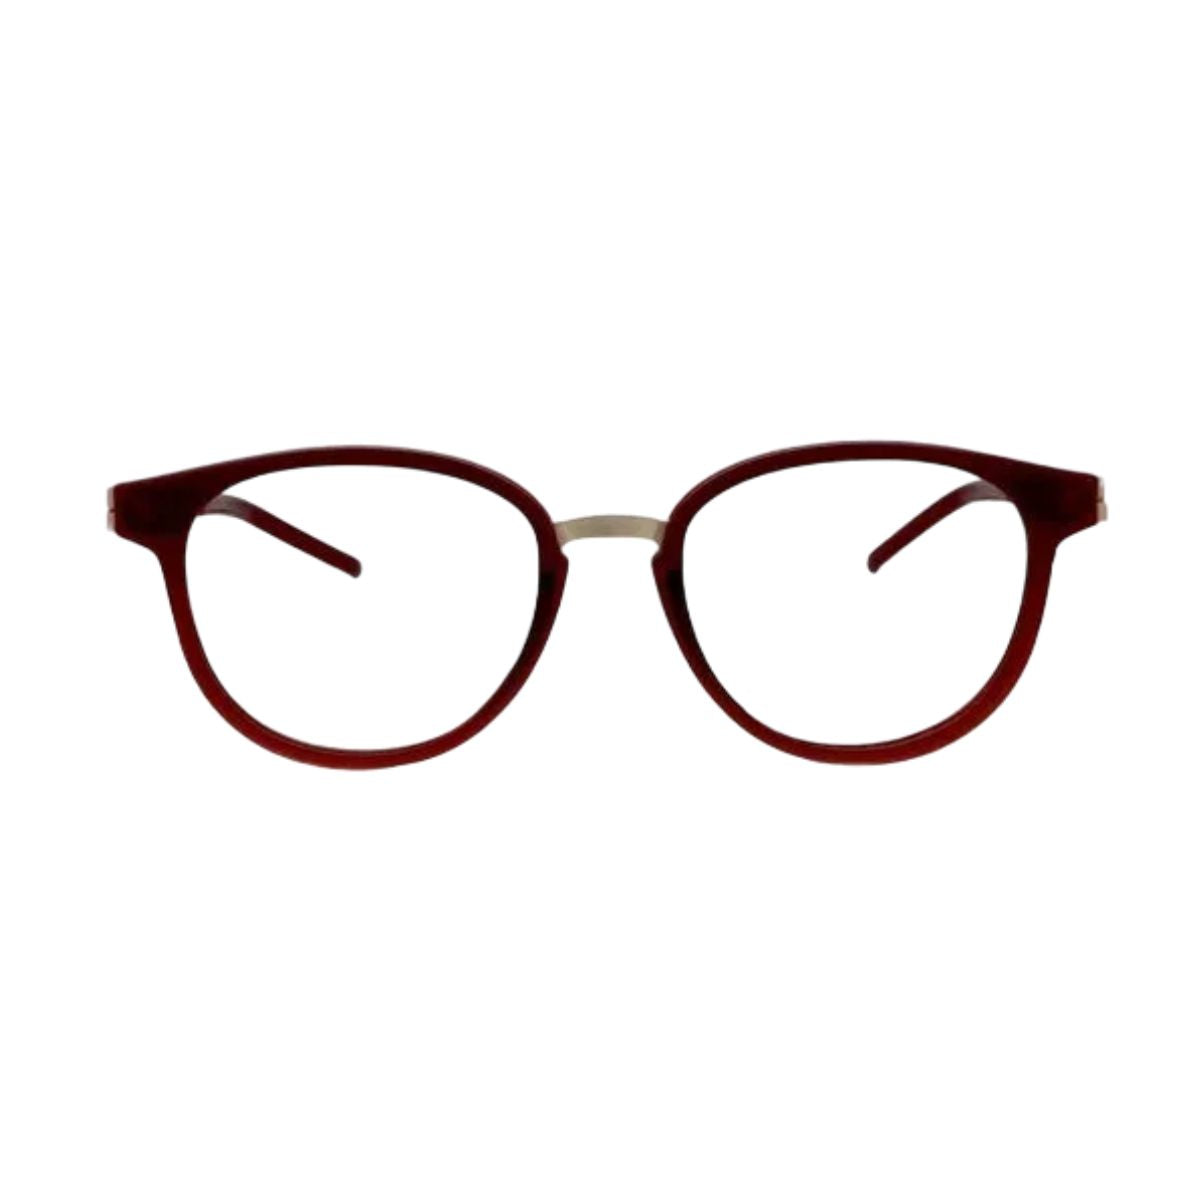 " stylish Tommy Hilfiger 6005 C2 oval shape eyeglasses frame for men's and women's at optorium"